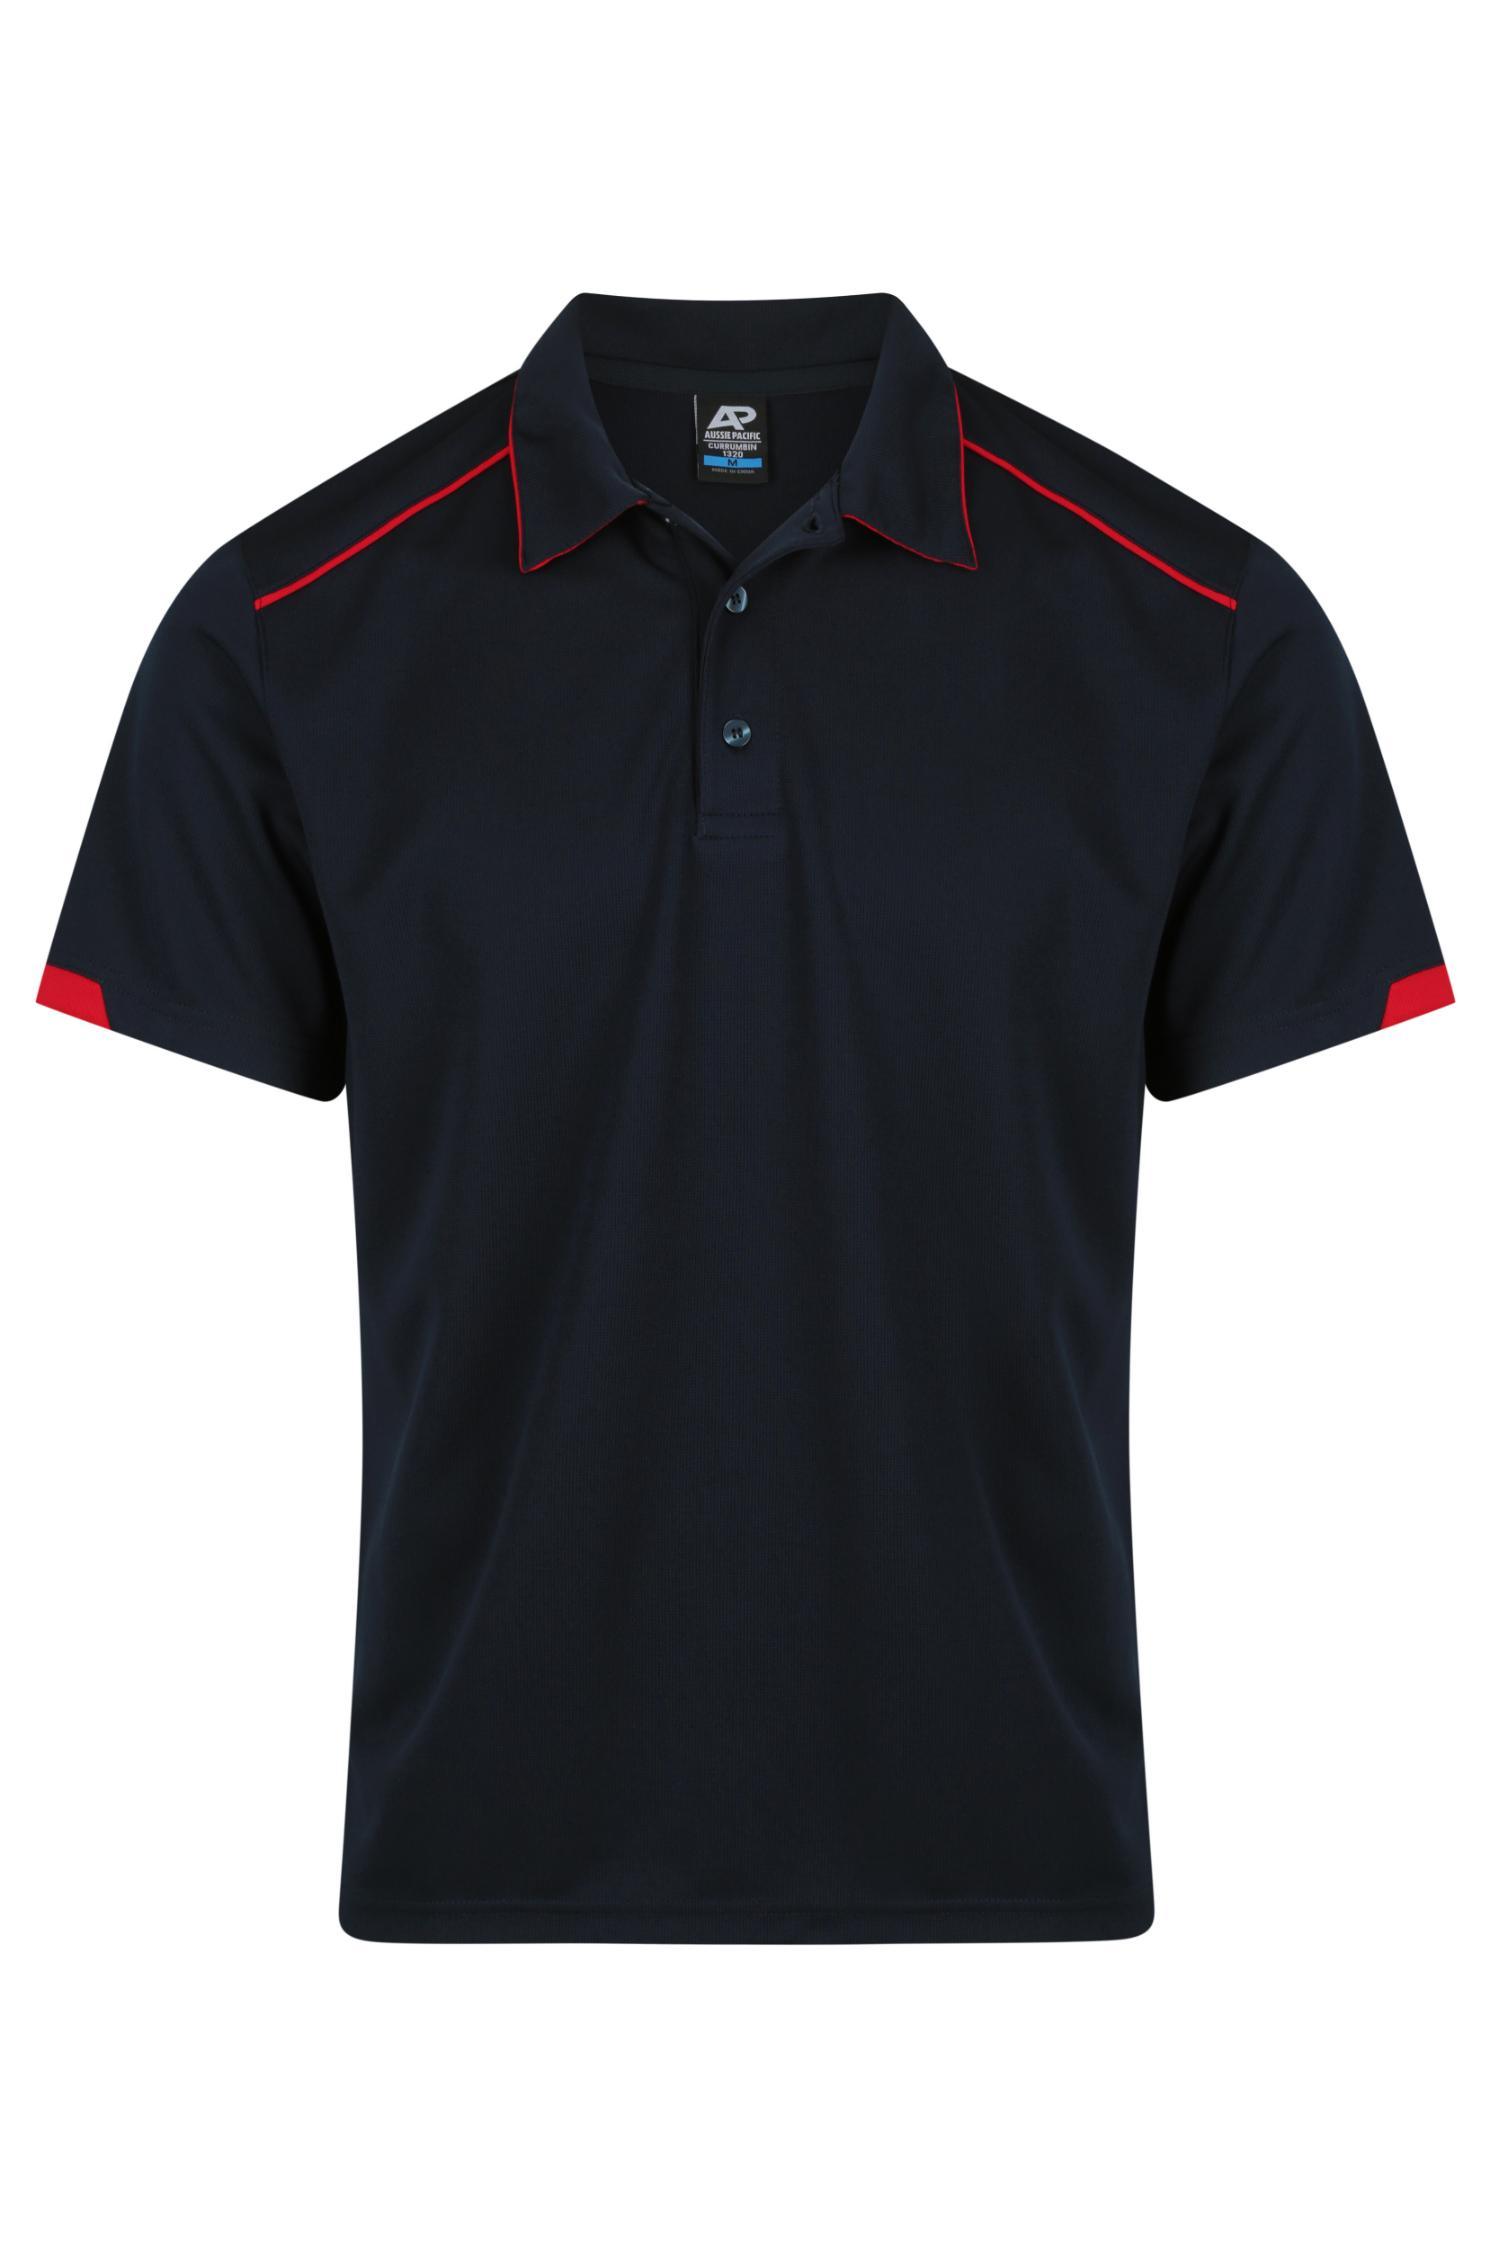 Currumbin Workwear Polo Shirts - Navy/Red